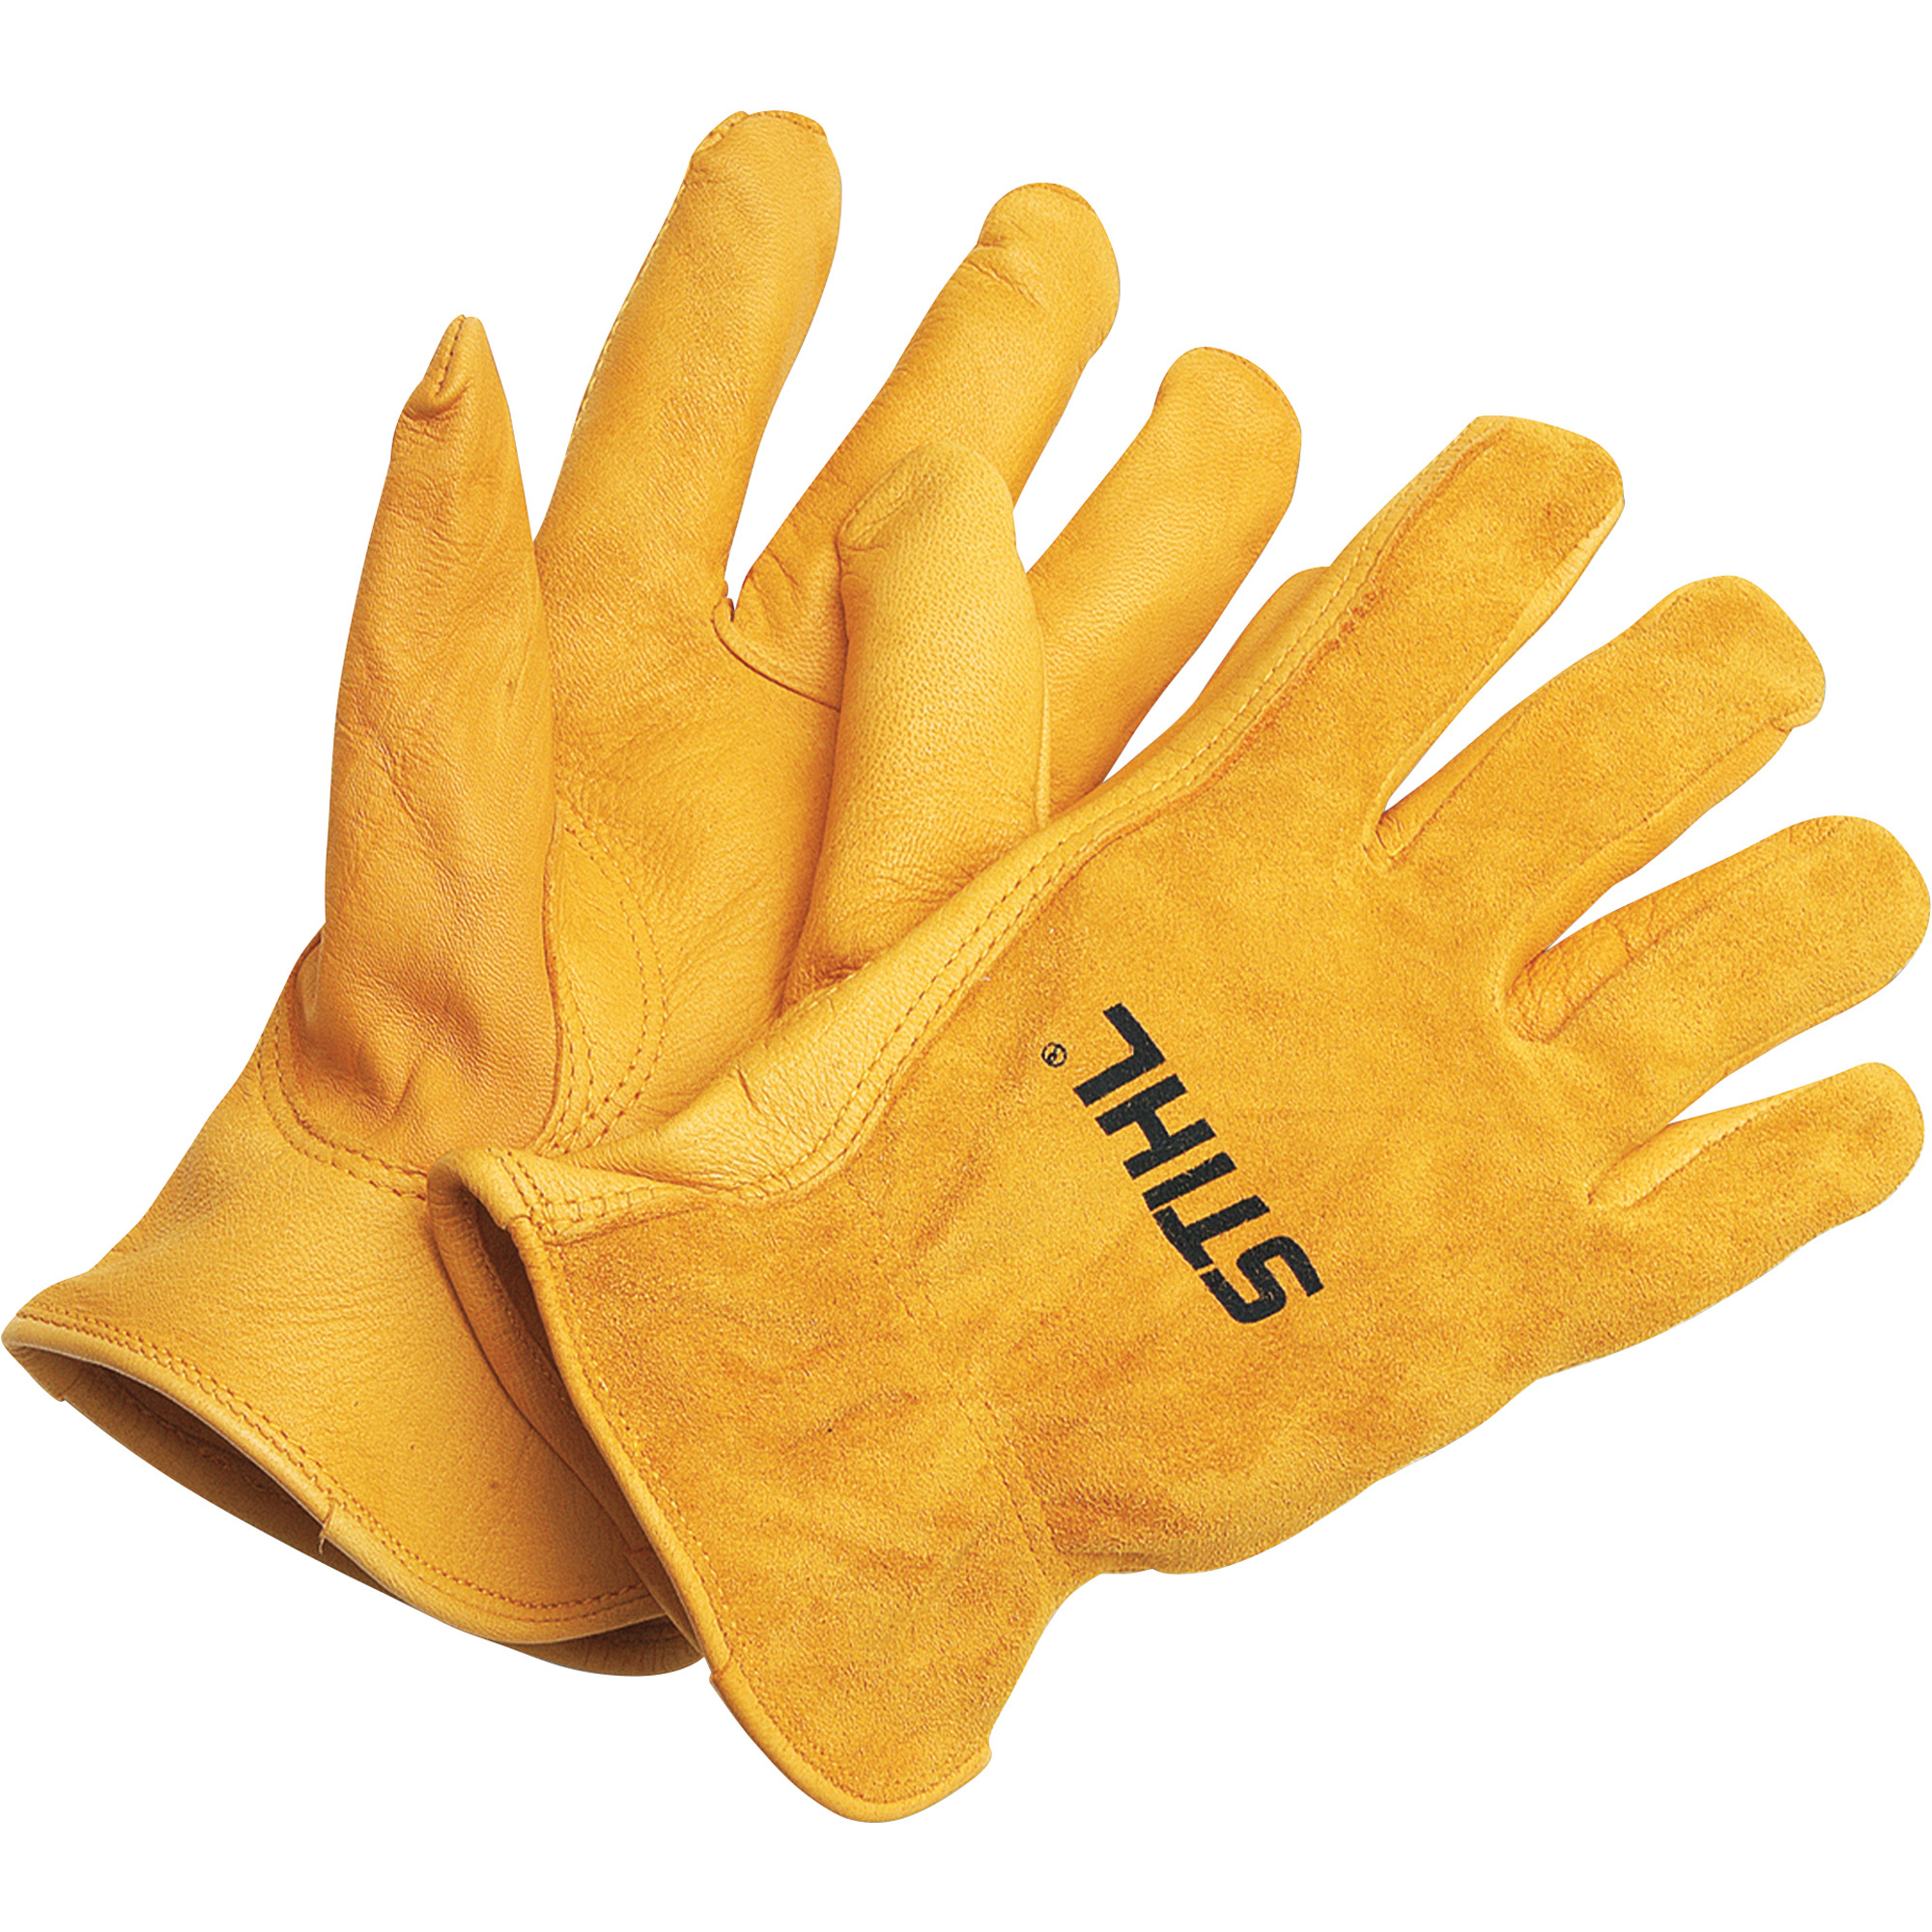 STIHL Landscaper Gloves, XL, Model 0000 886 1105